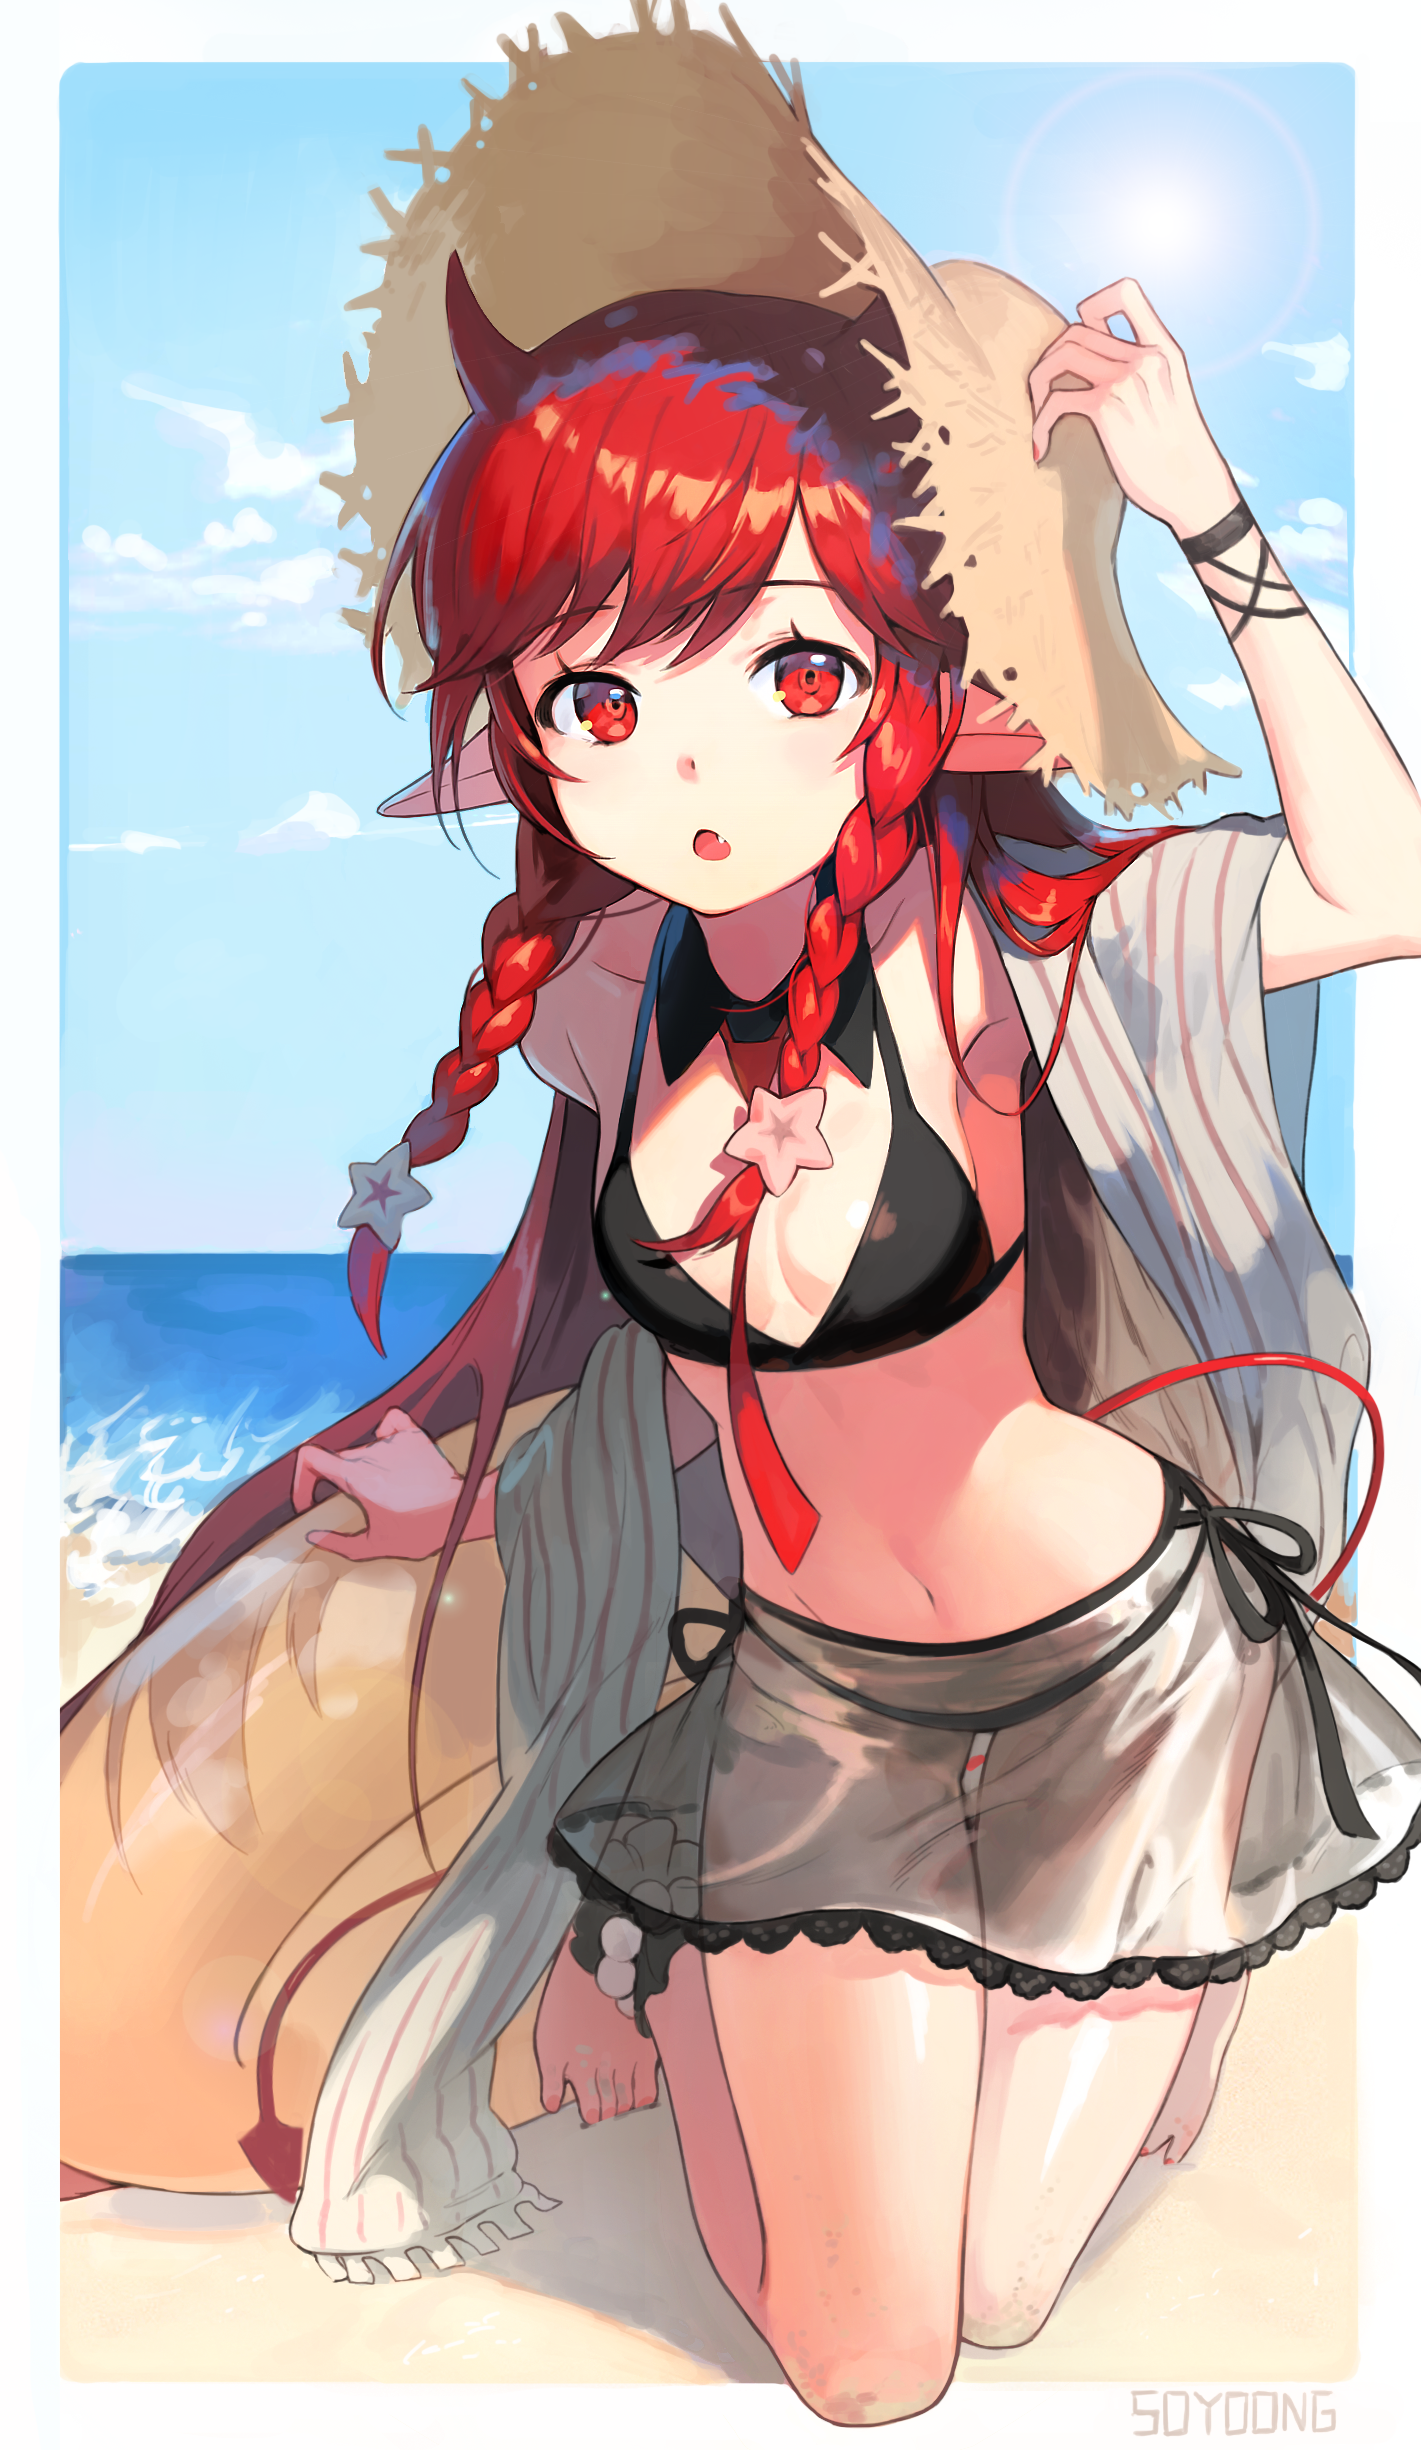 Anime 1421x2450 anime anime girls digital art artwork 2D portrait display Soyoong Jun Arknights Vigna (Arknights) beach redhead twintails braids red eyes pointy ears bikini kneeling